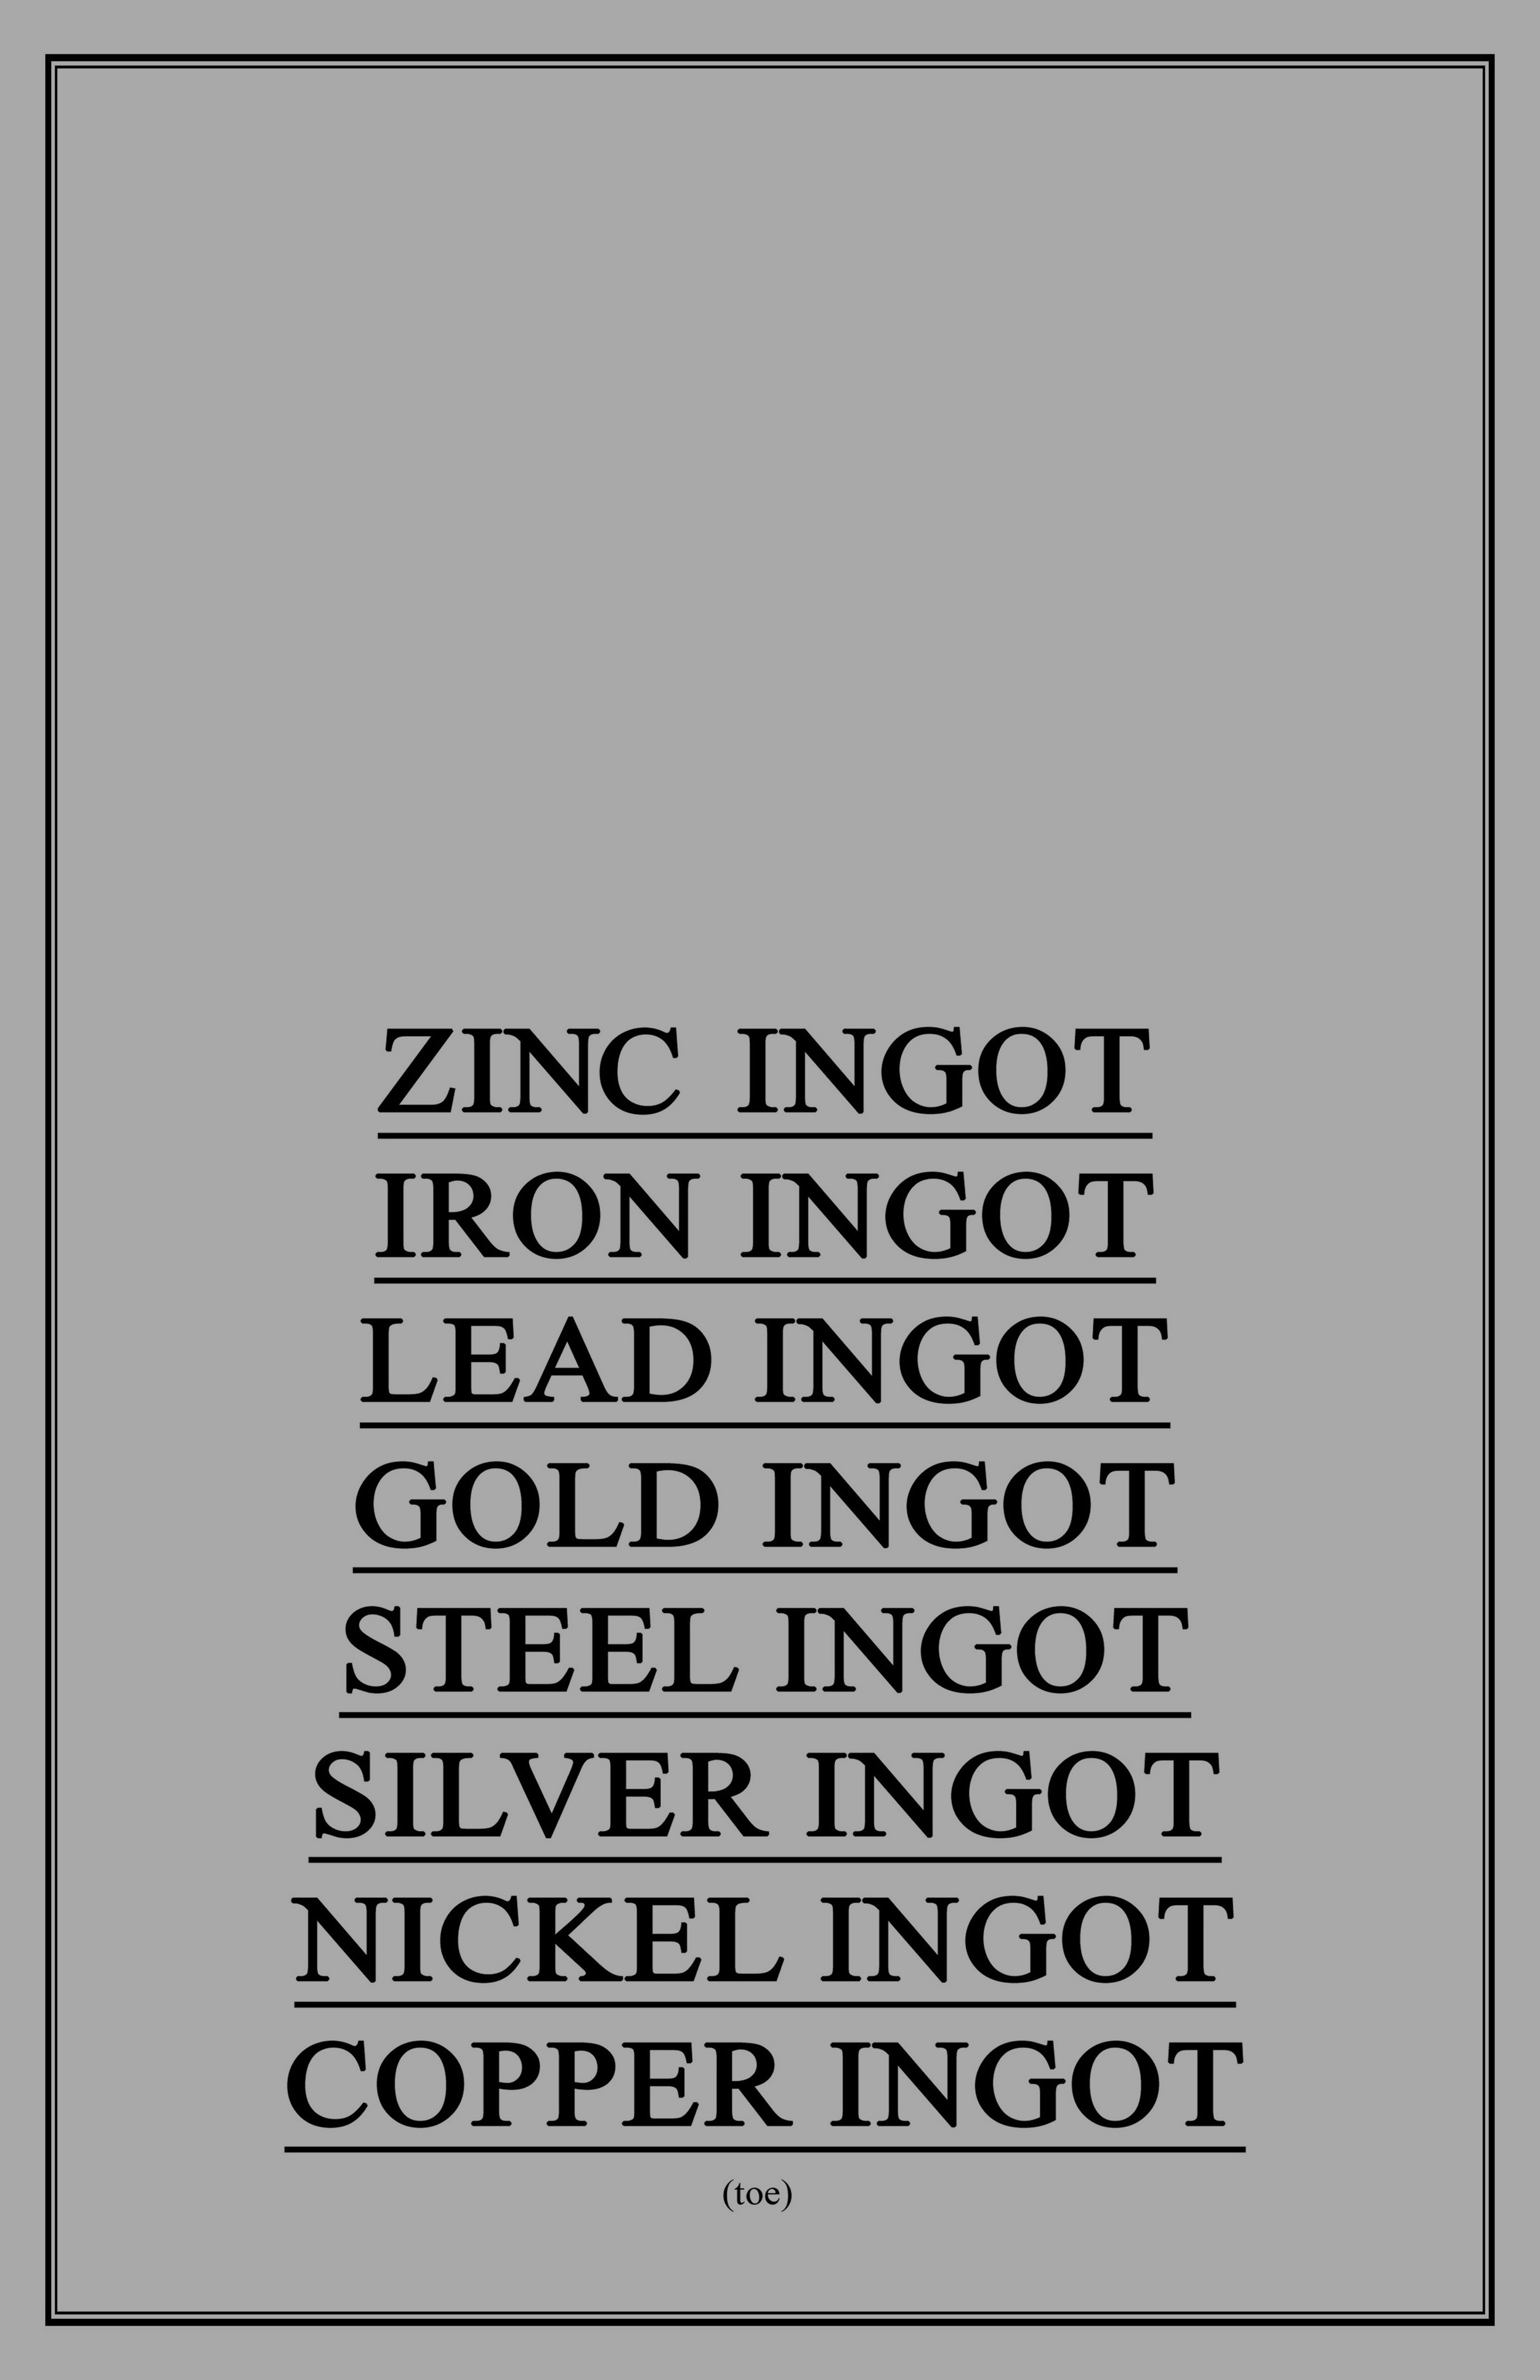 ZINC INGOT big 2.jpg